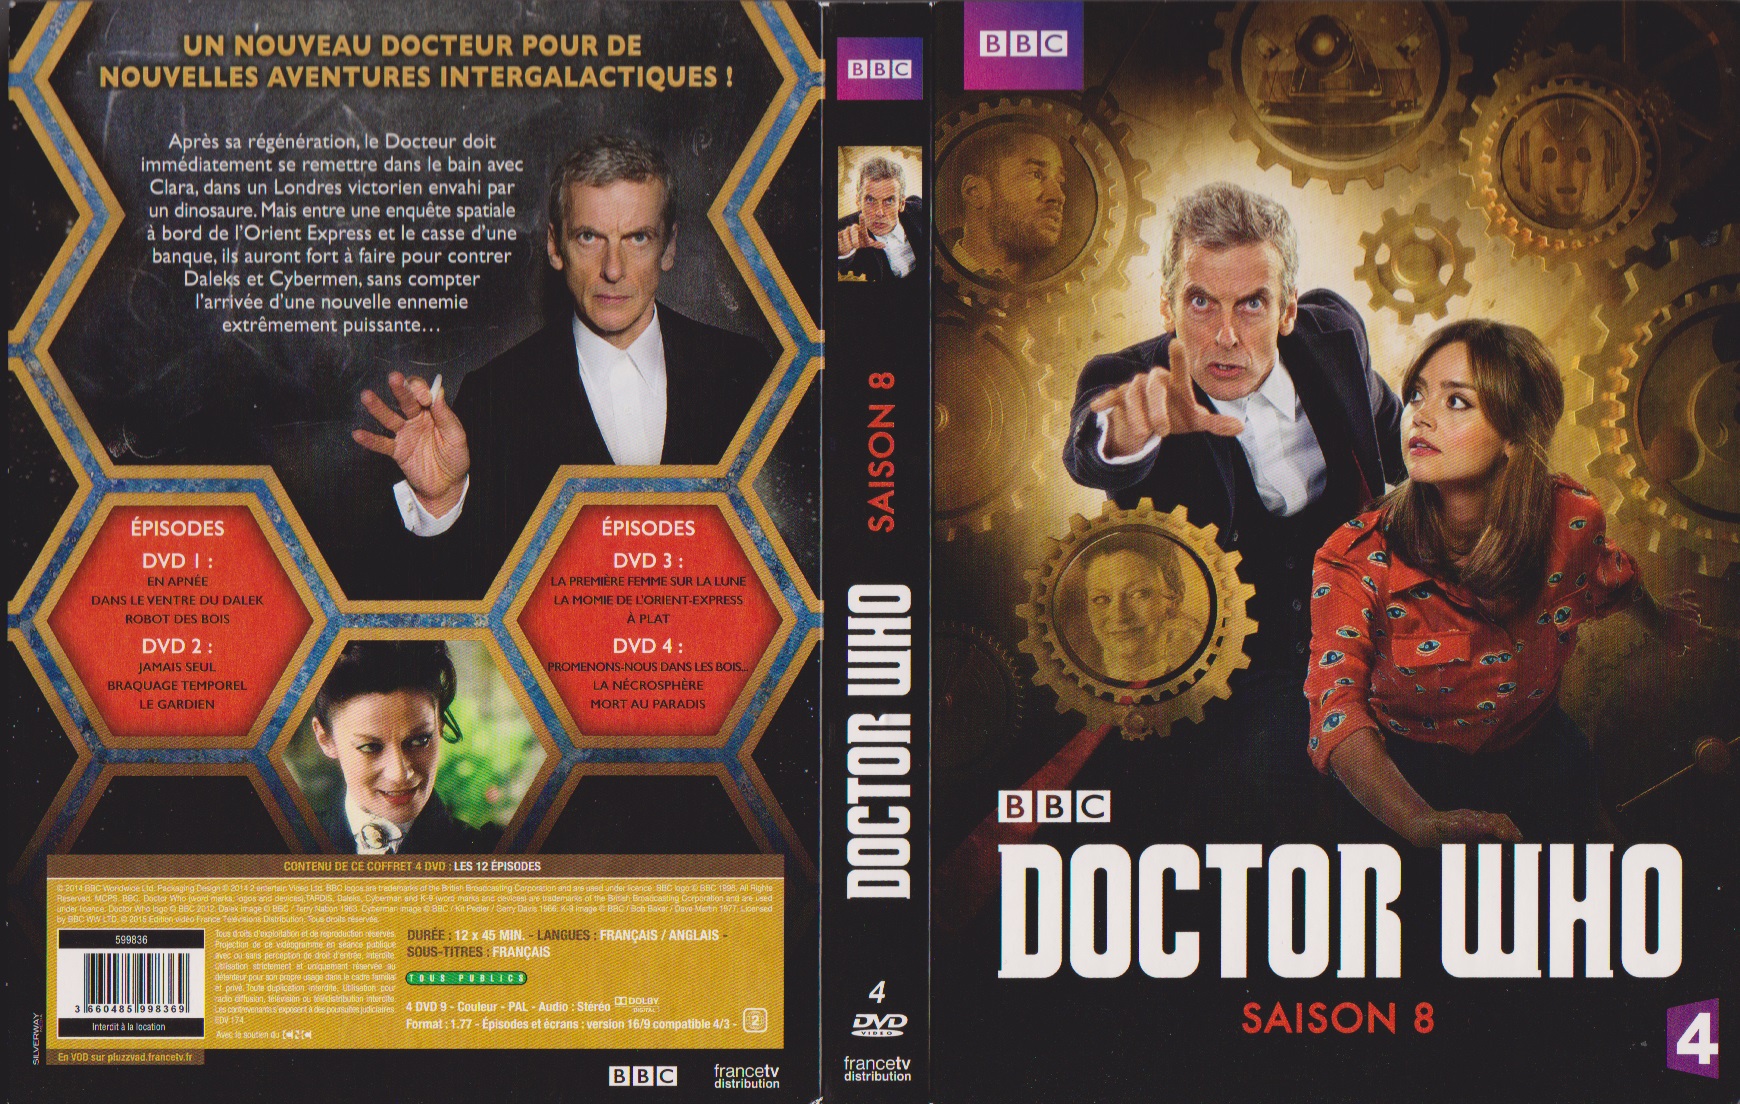 Jaquette DVD Doctor Who Saison 8